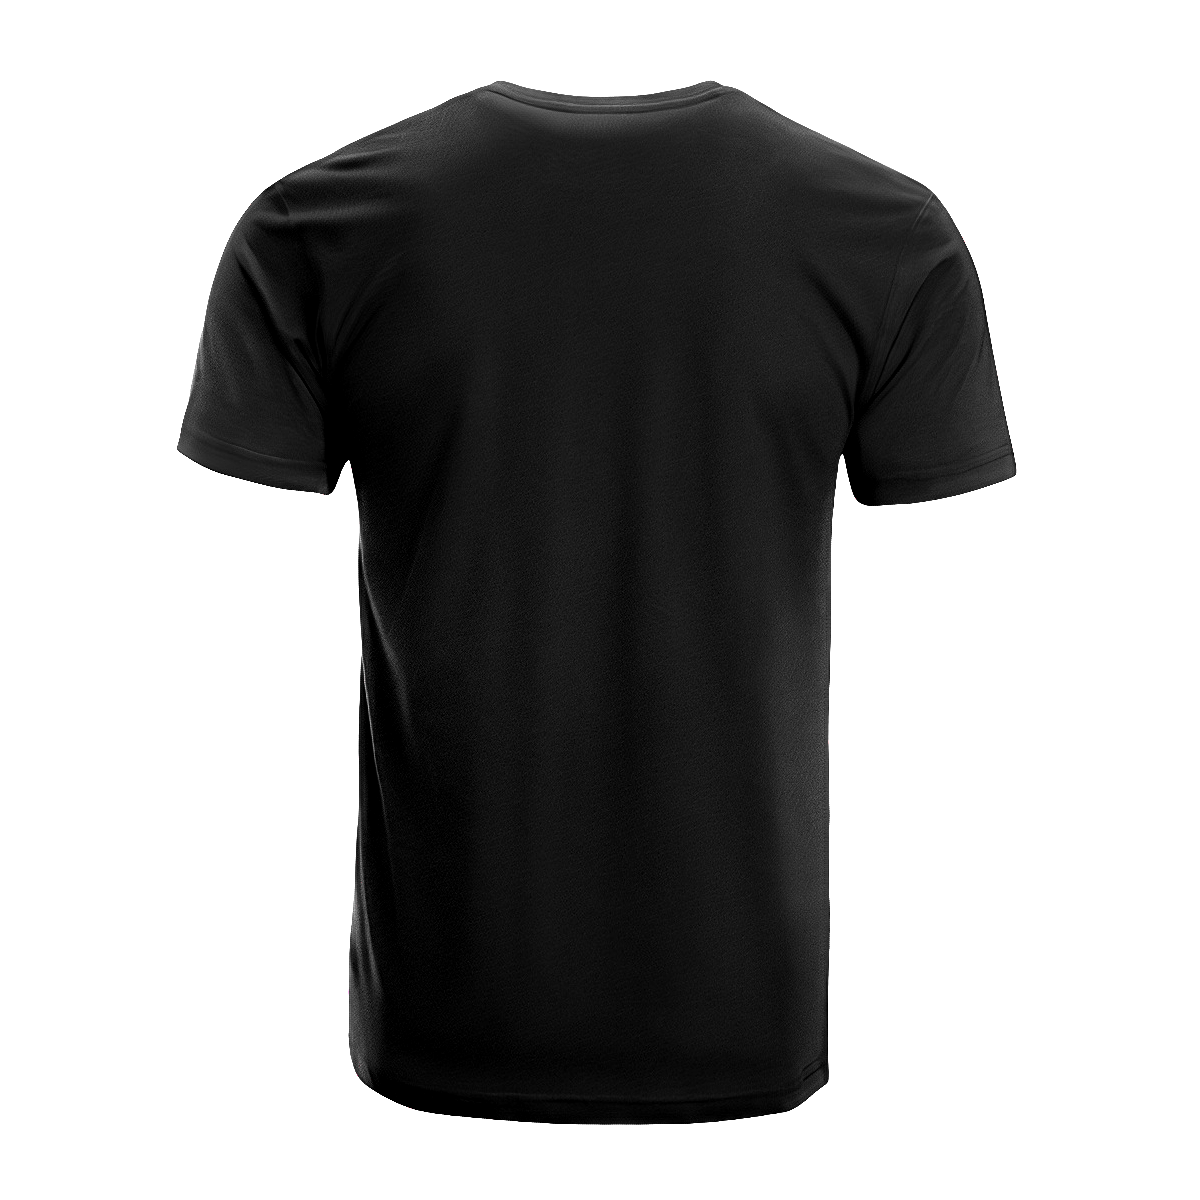 Sneddon Tartan Crest T-shirt - I'm not yelling style